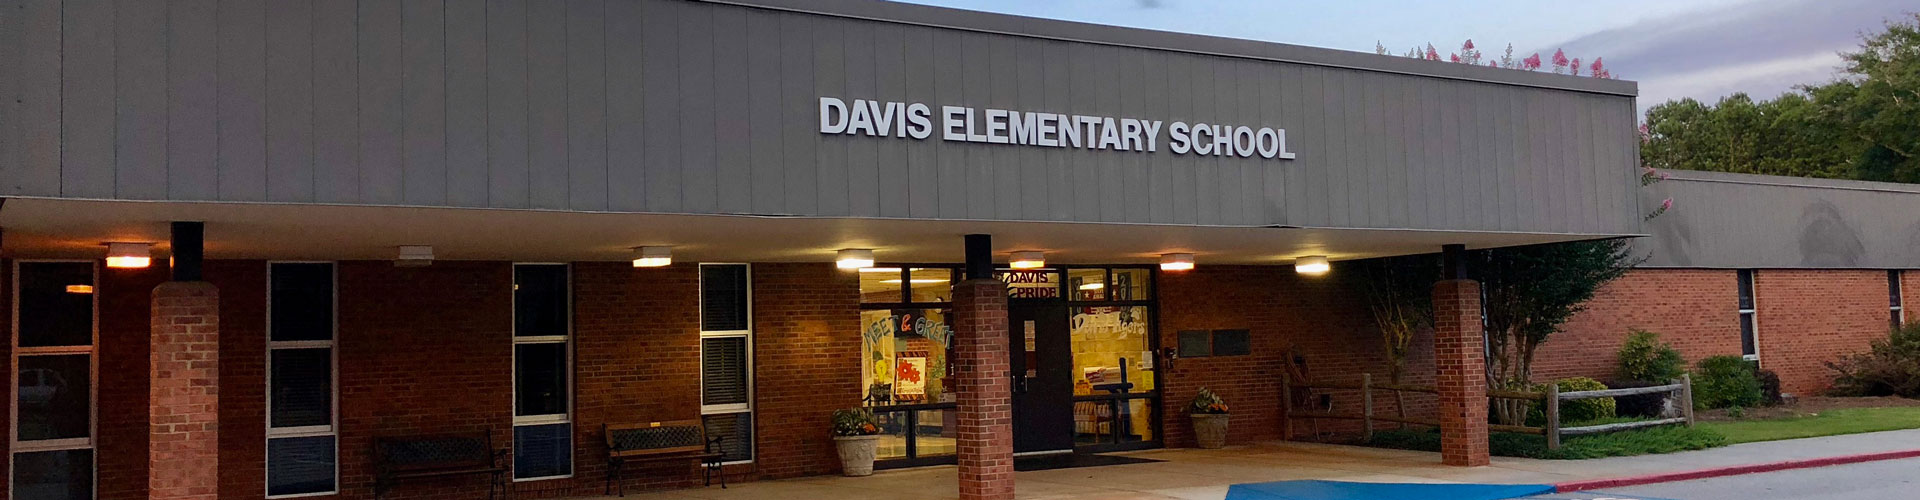 Davis Elementary School